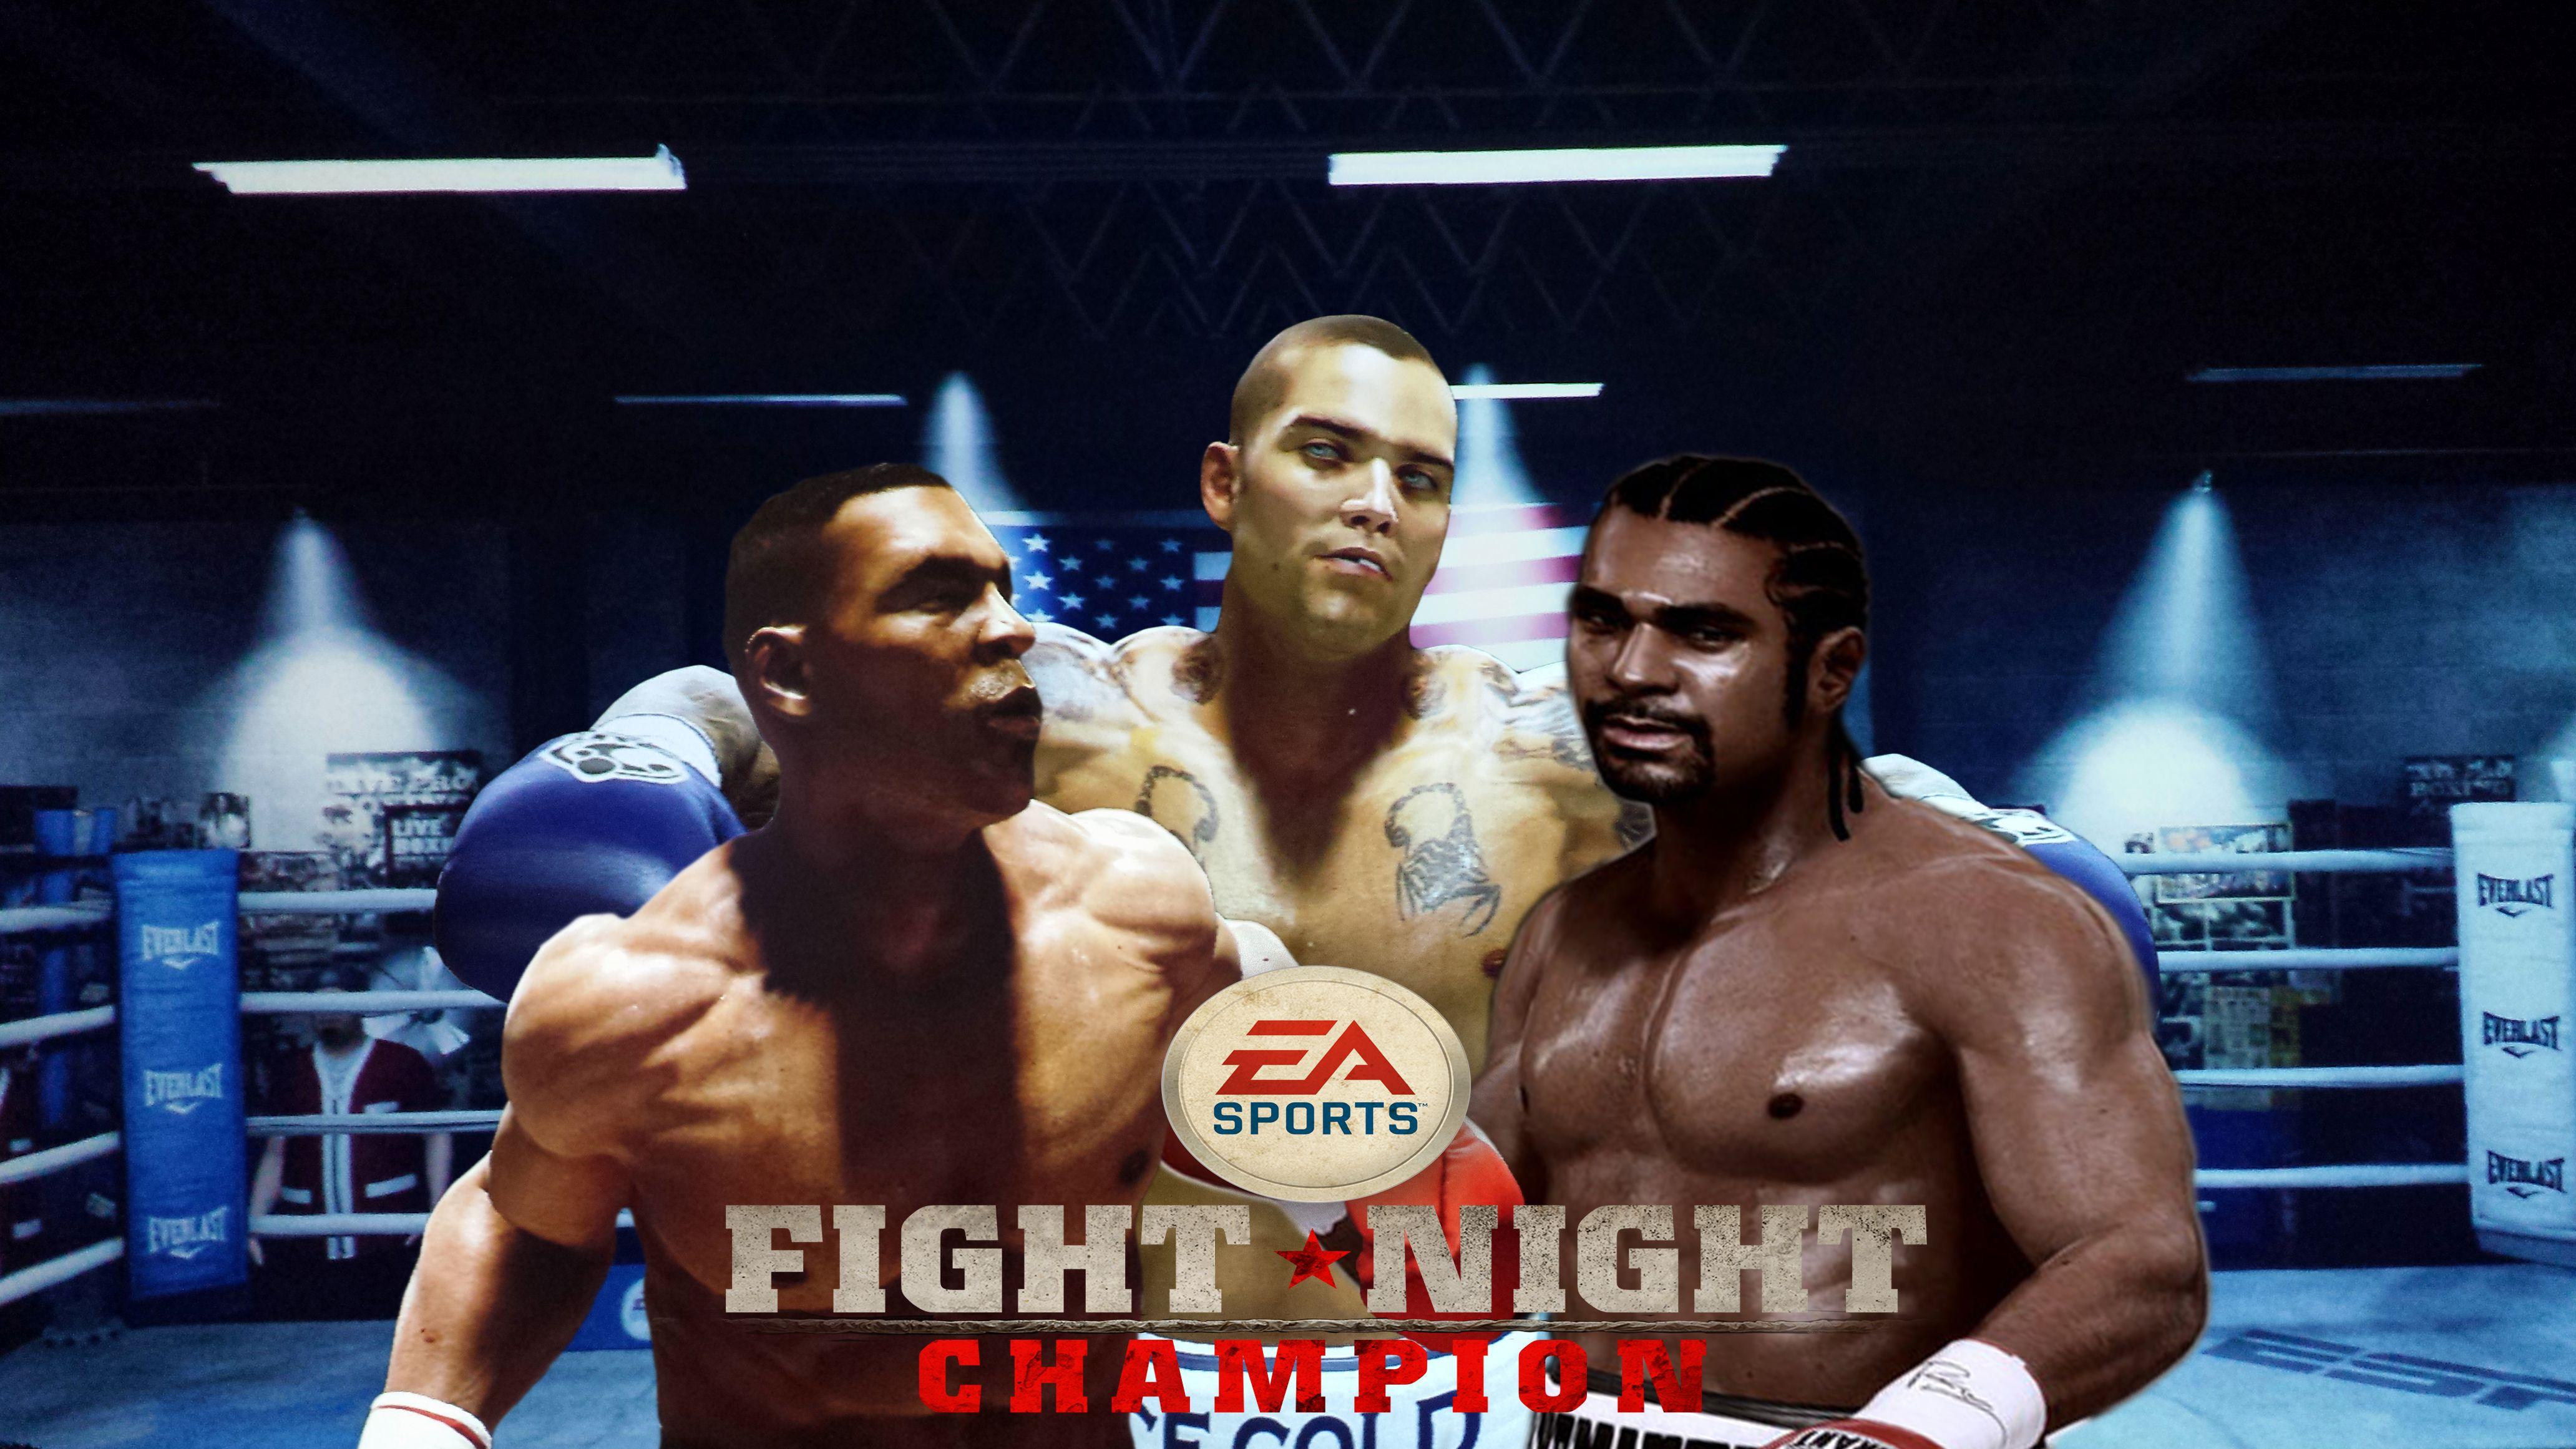 fight night champion wallpaper HD ps3 ufc